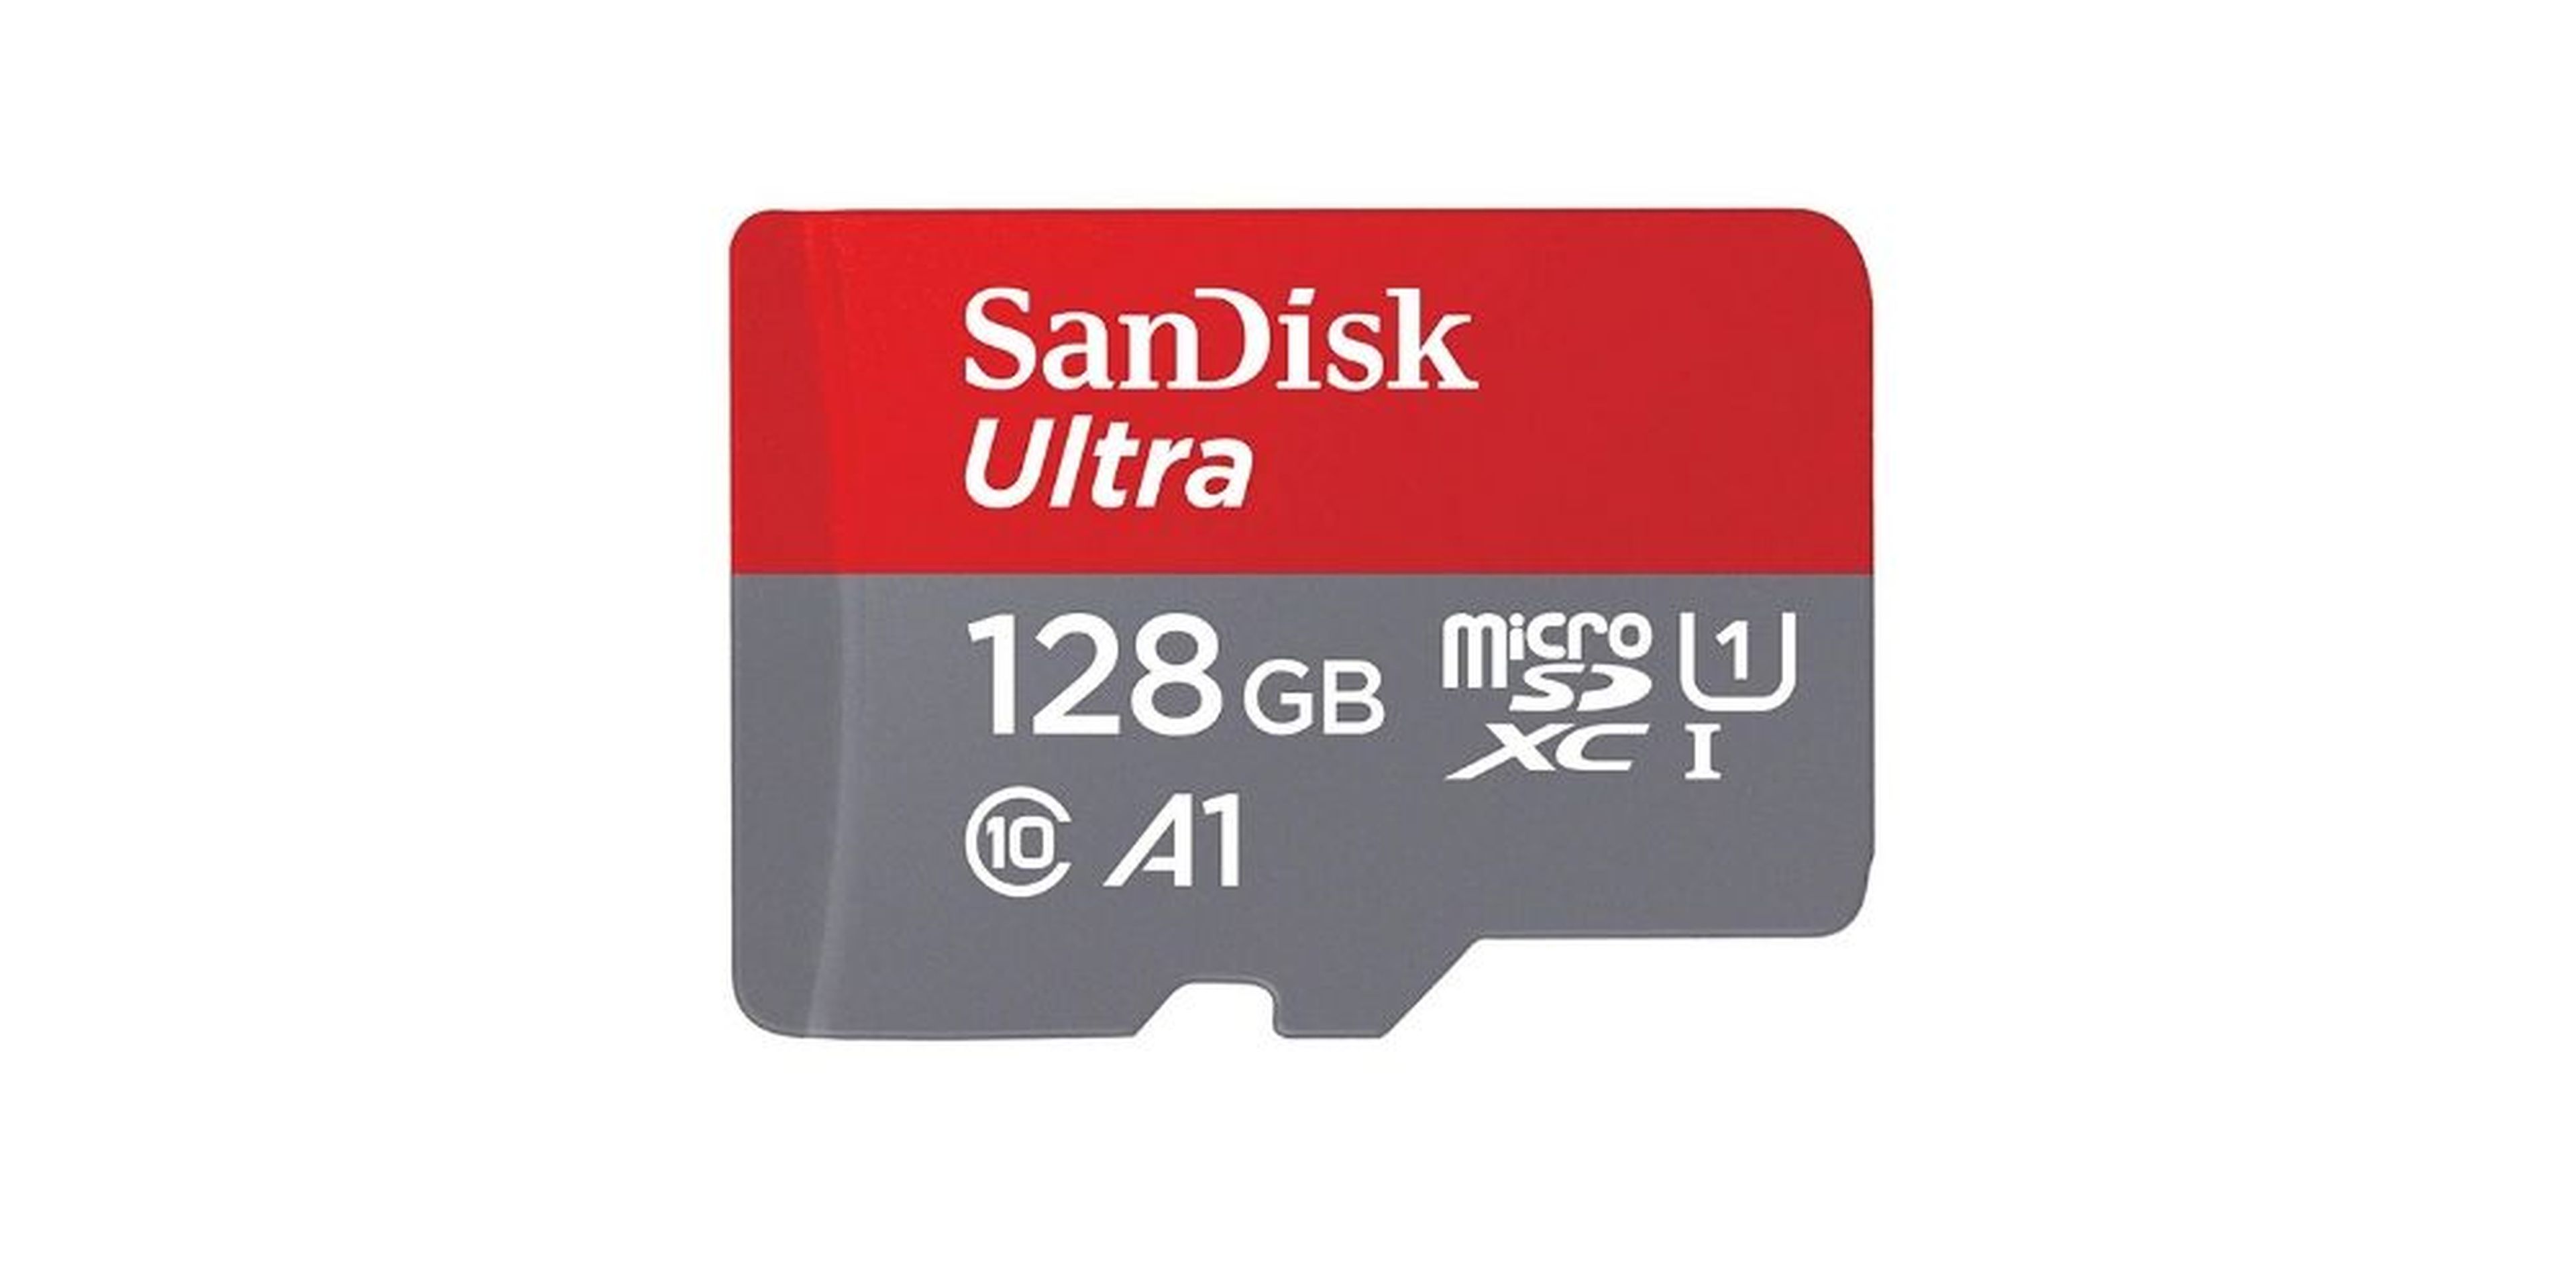 Mejor tarjeta microSD para fotografía